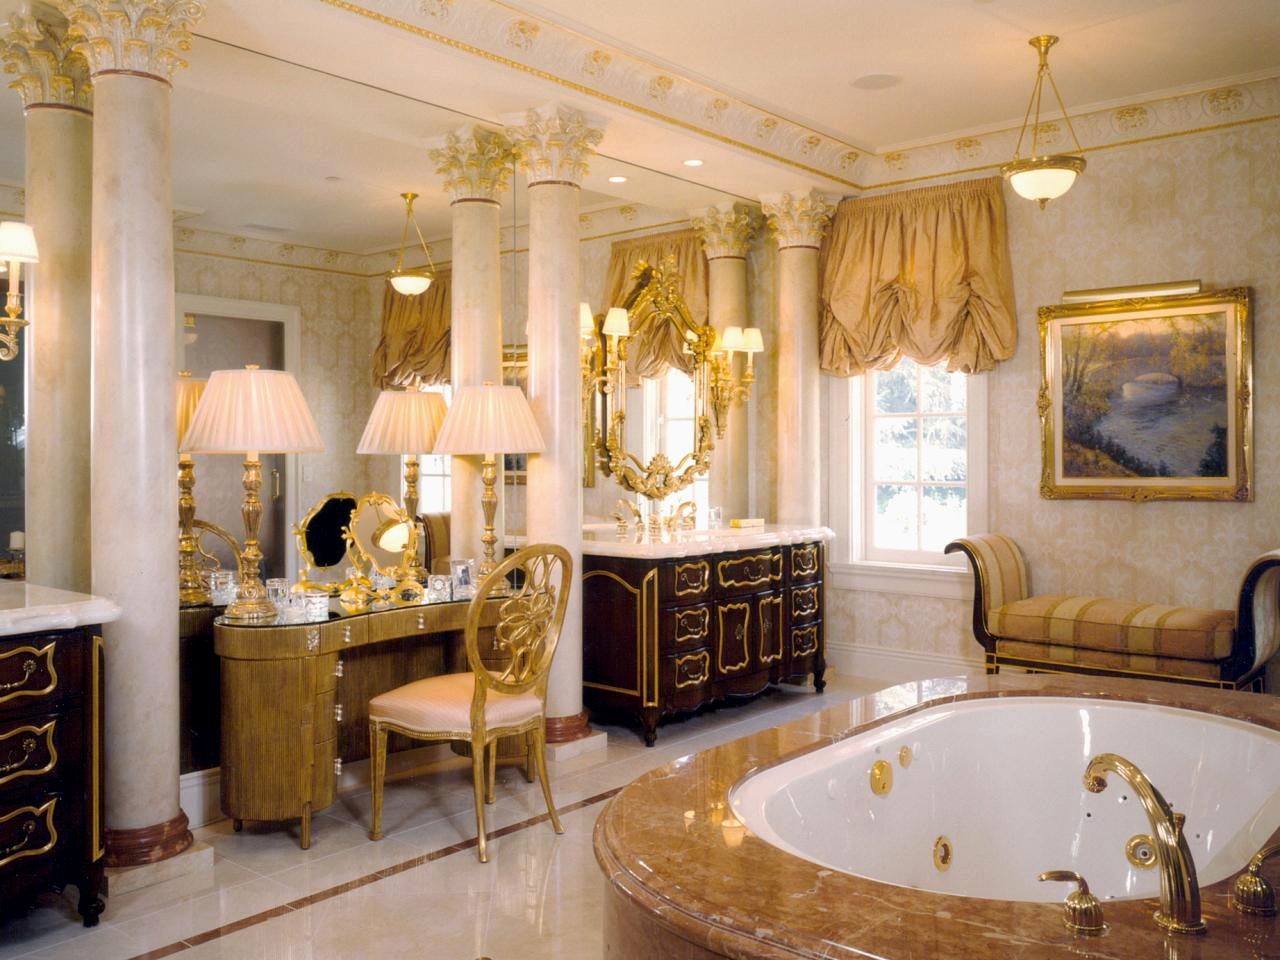 Extravagant gold bath